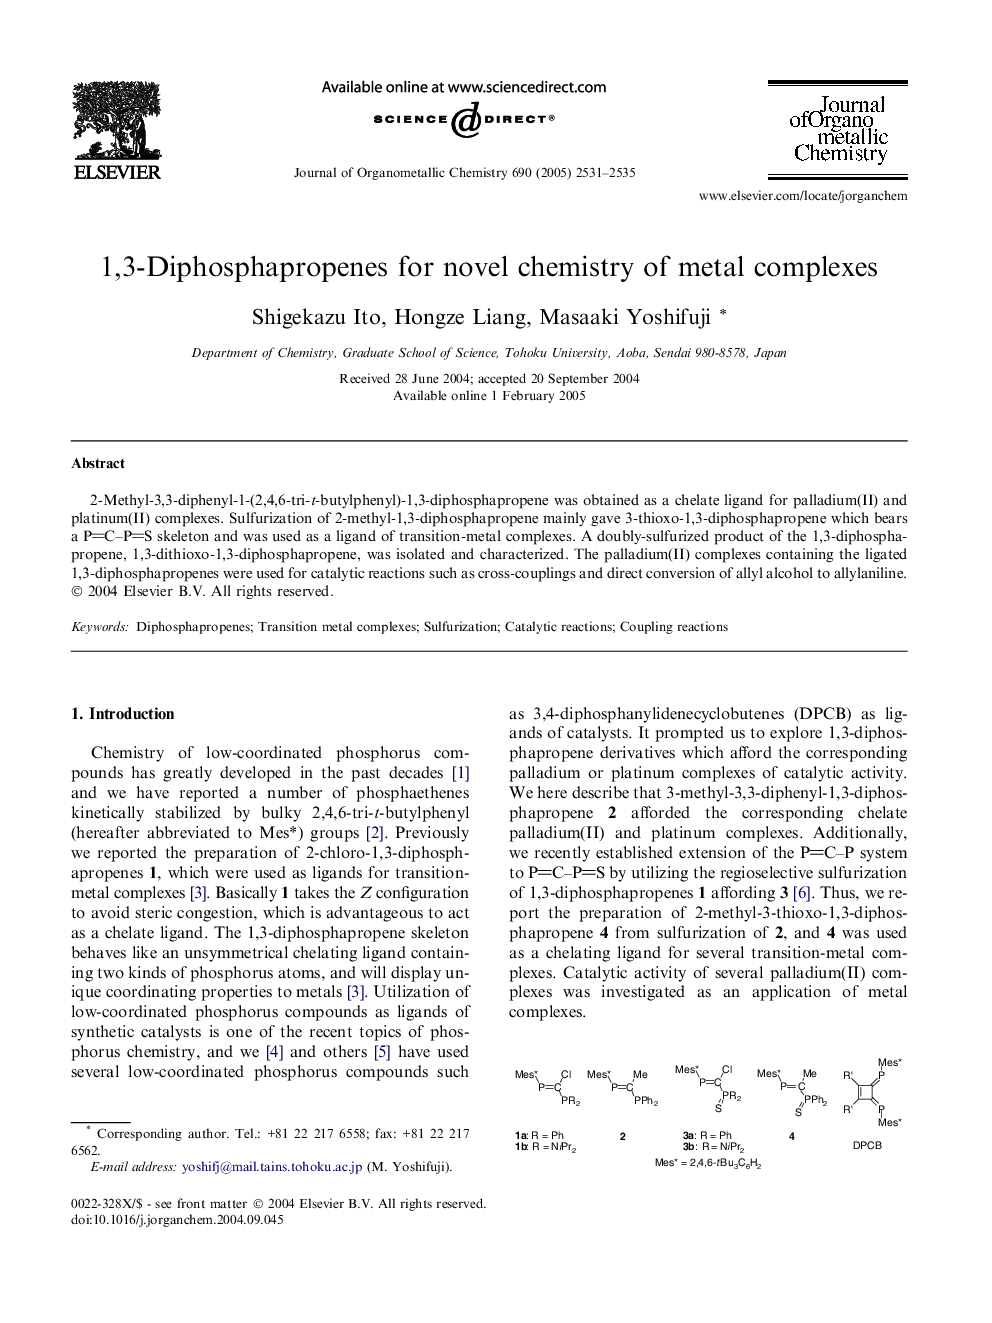 1,3-Diphosphapropenes for novel chemistry of metal complexes